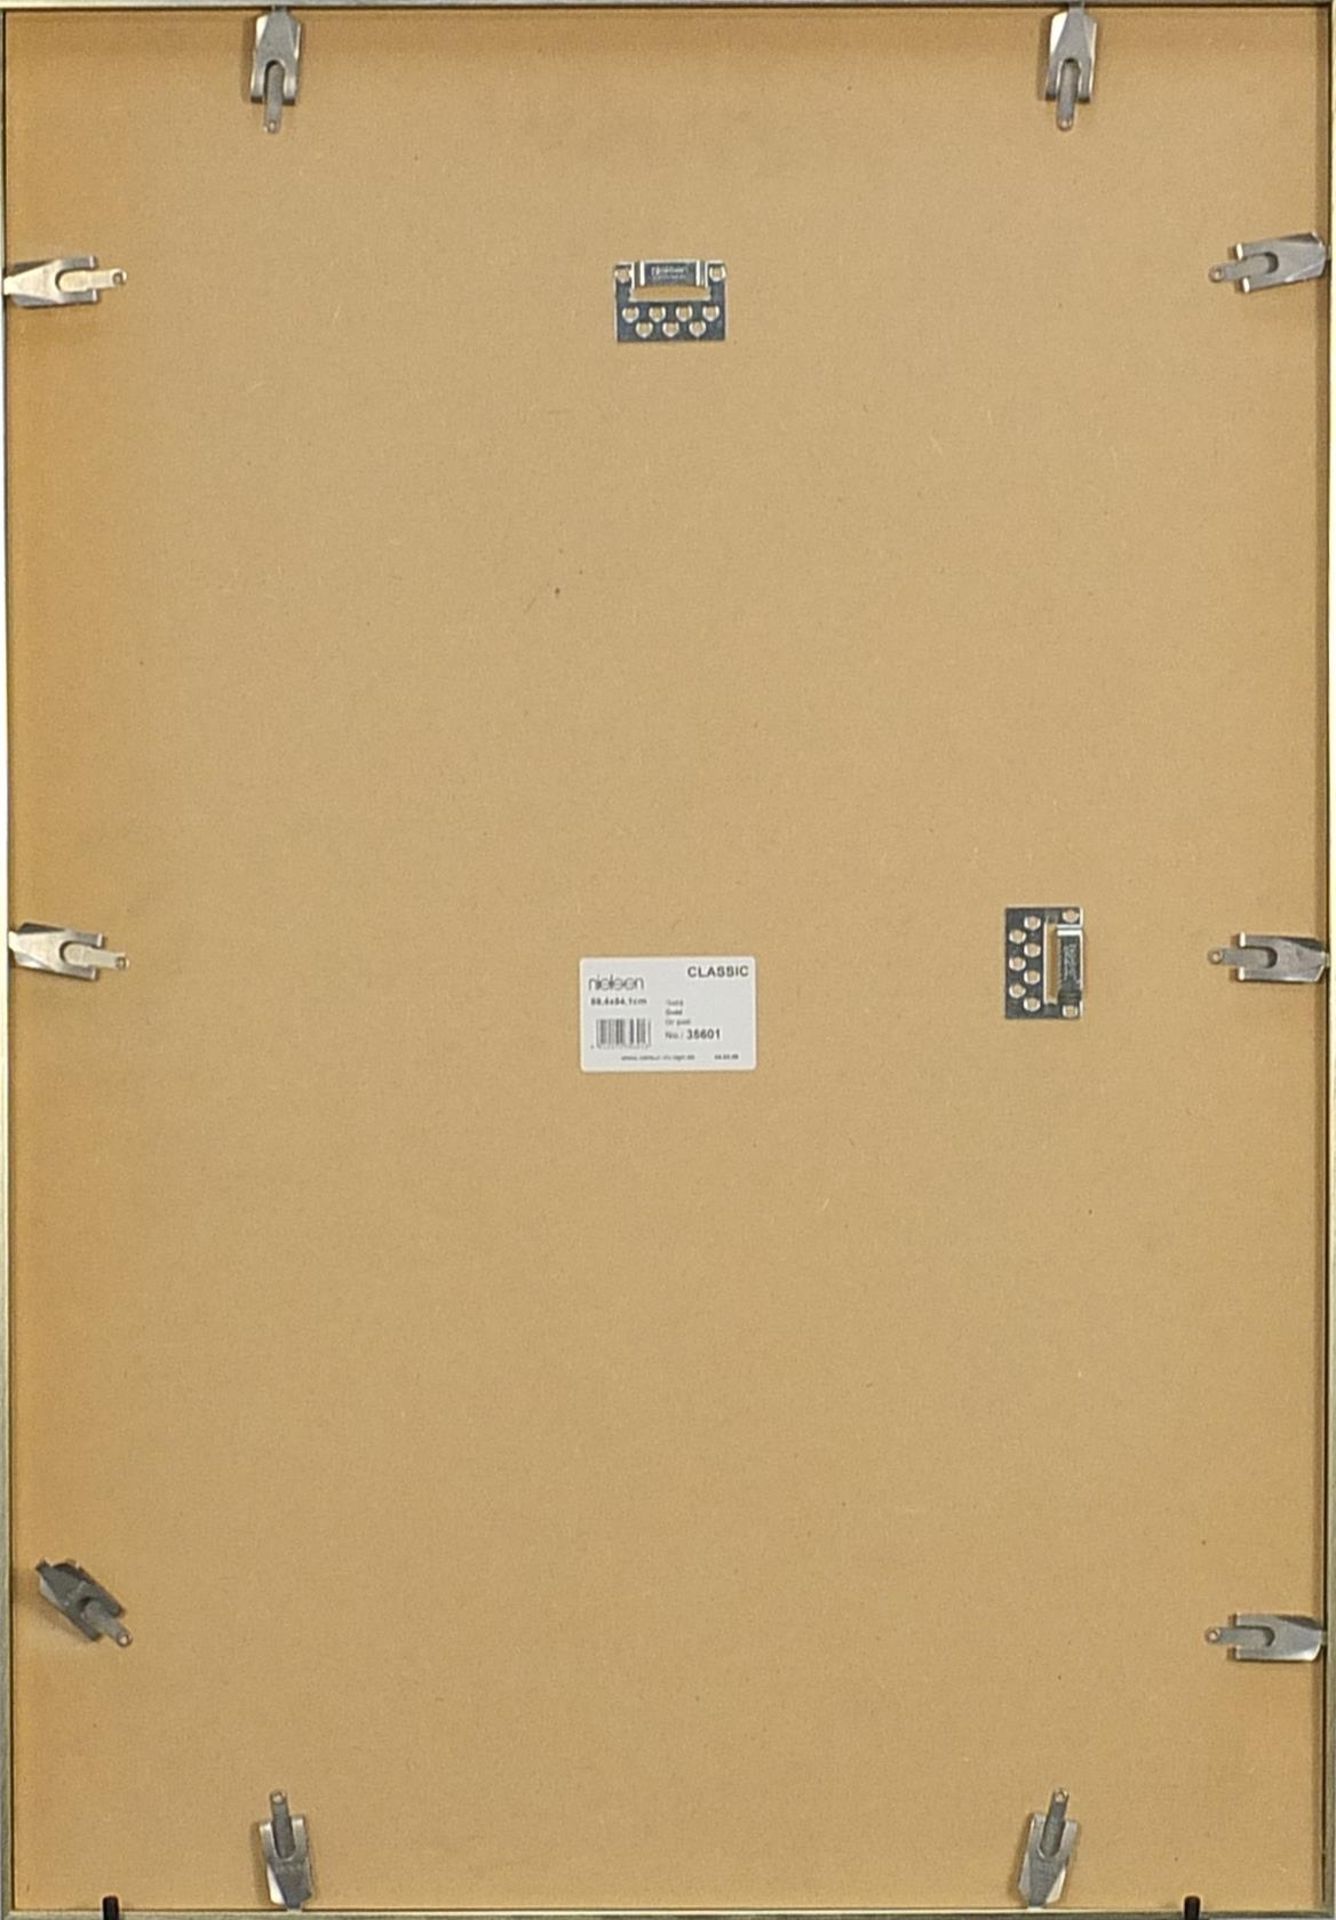 Bauhaus Dessau cardboard poster print, mounted and framed, 85cm x 60cm excluding the mount and frame - Bild 3 aus 3